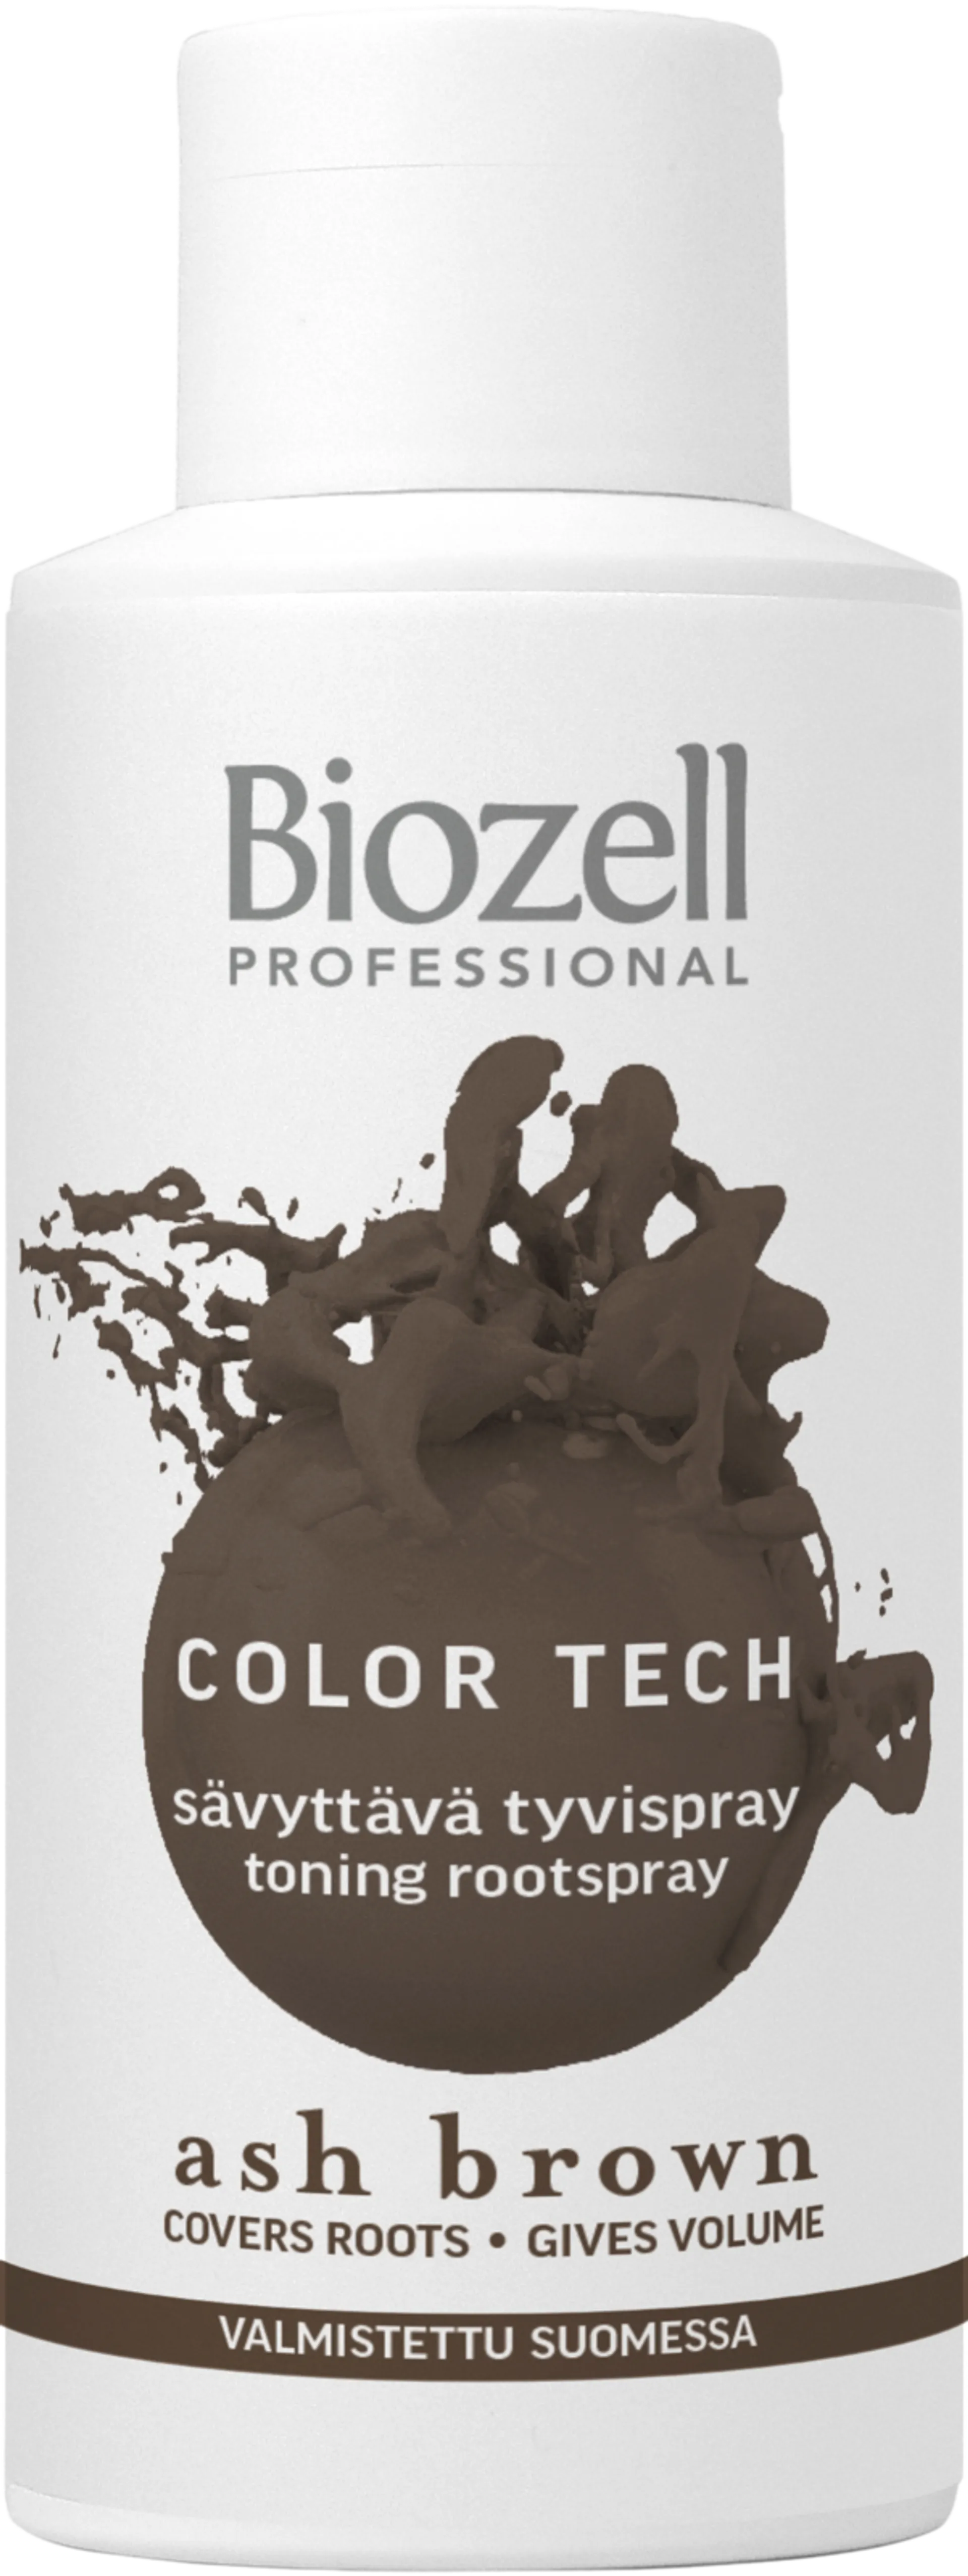 Biozell Color Tech Tyvispray Ash Brown 100ml